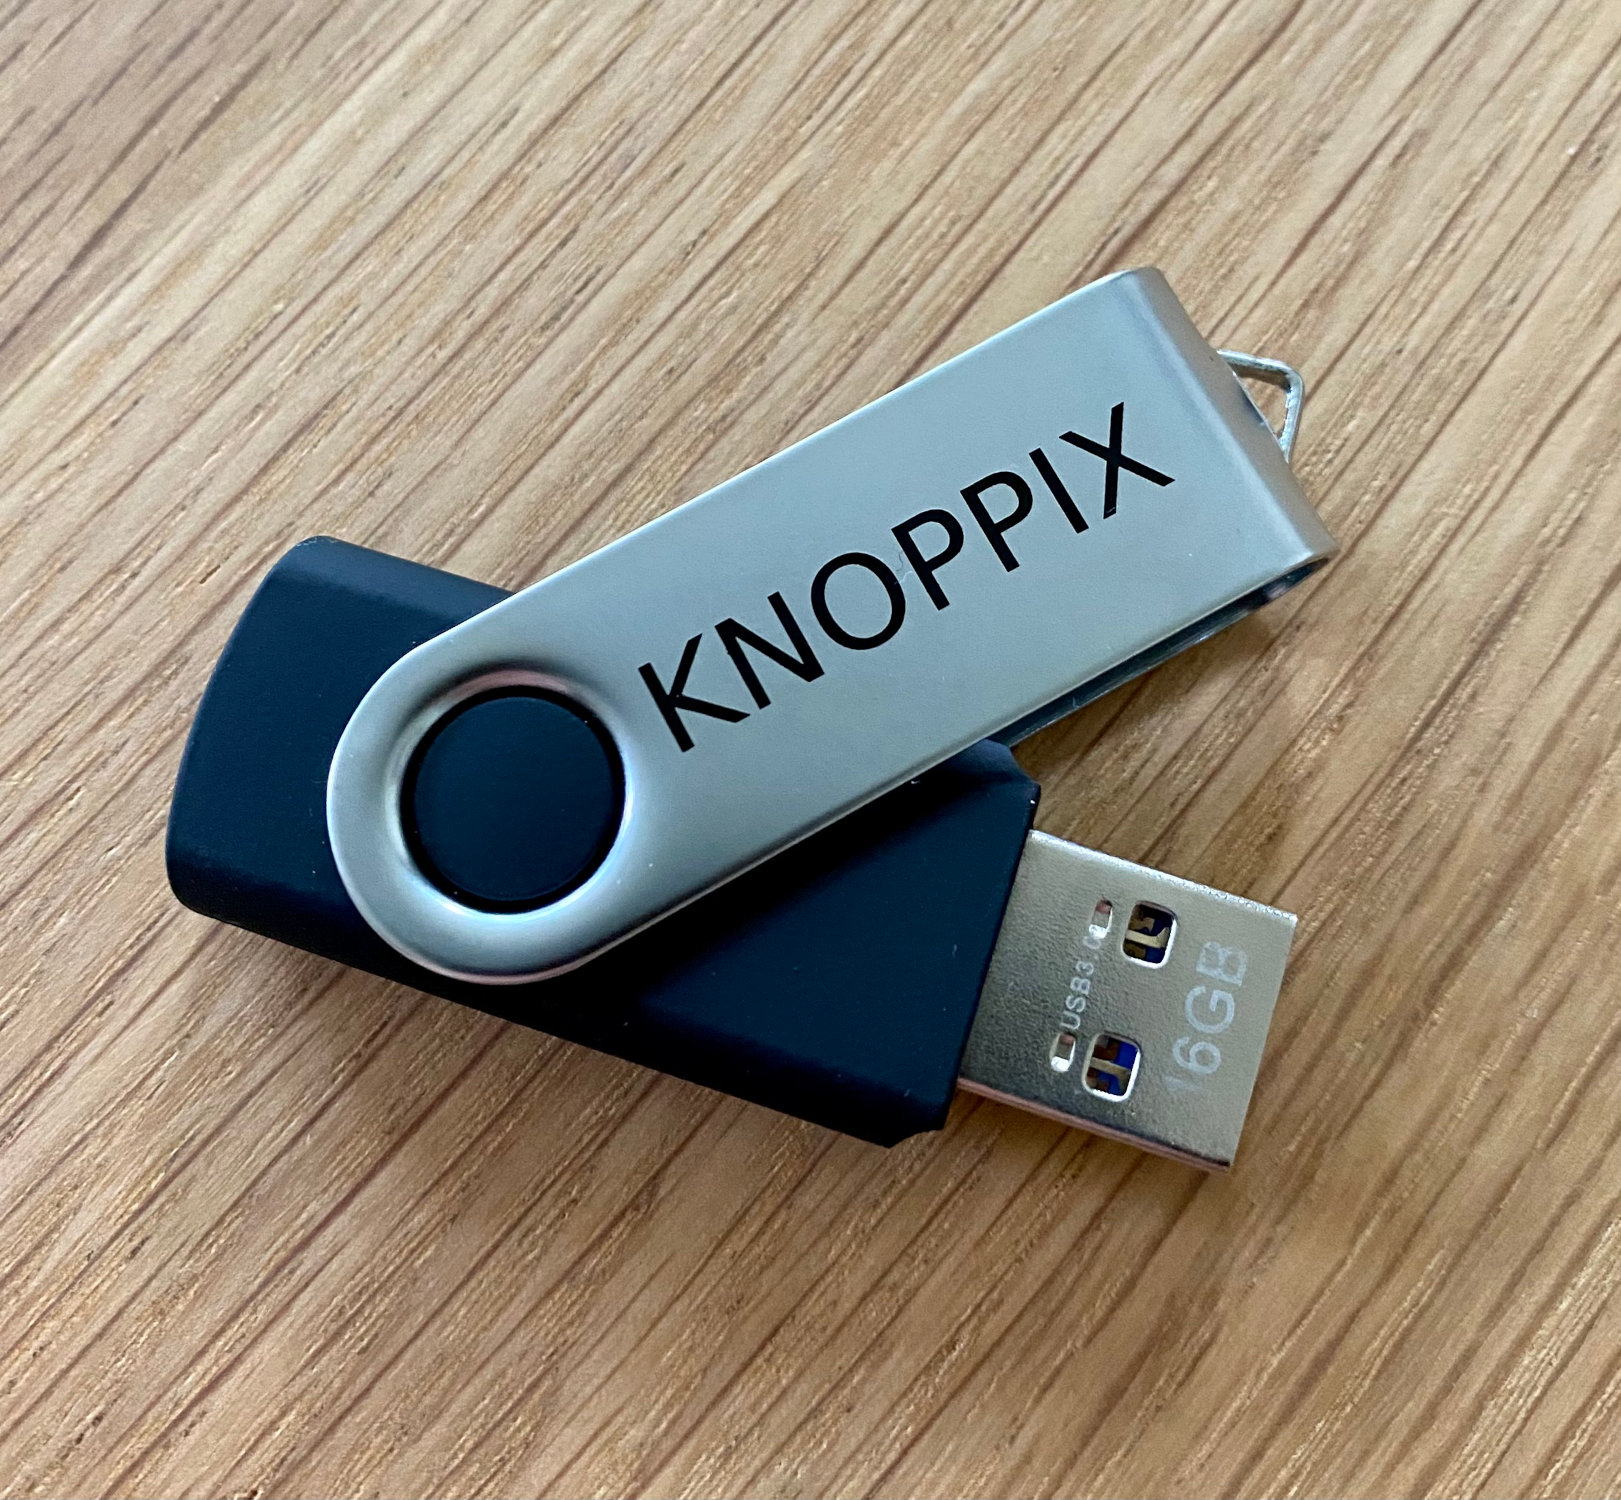 Knoppix USB stick